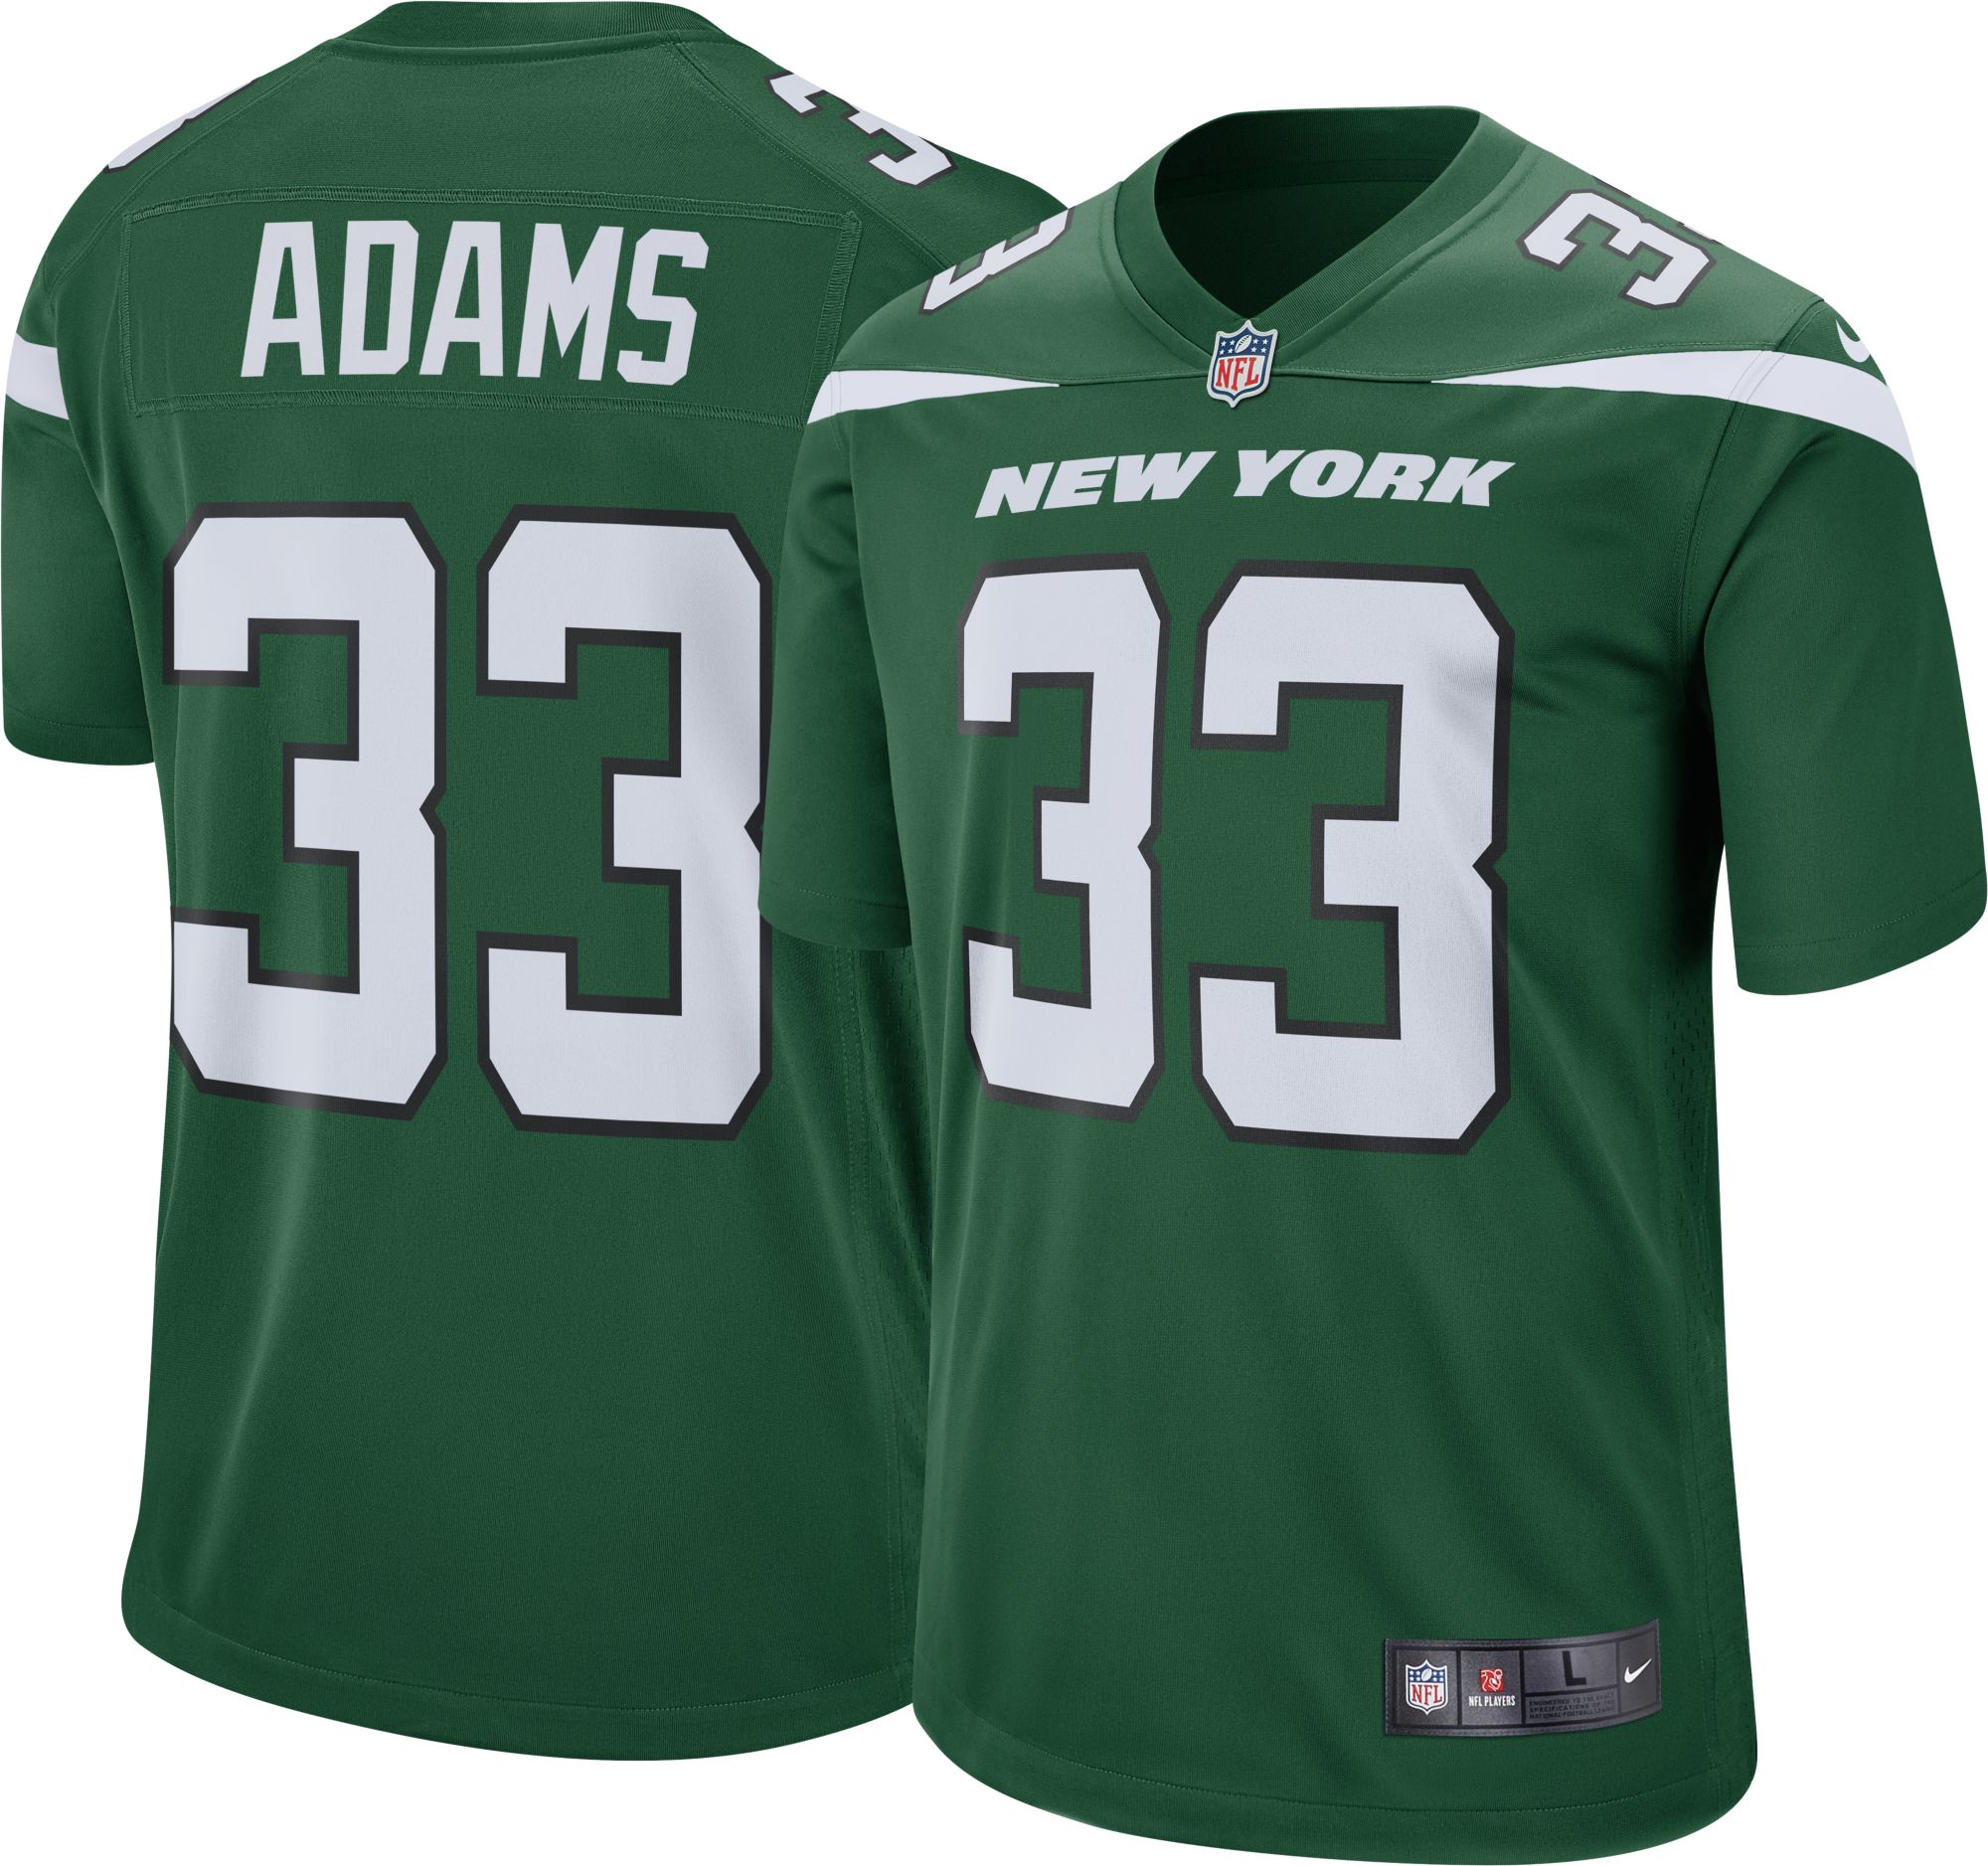 jamal adams jersey stitched Cheap NFL 